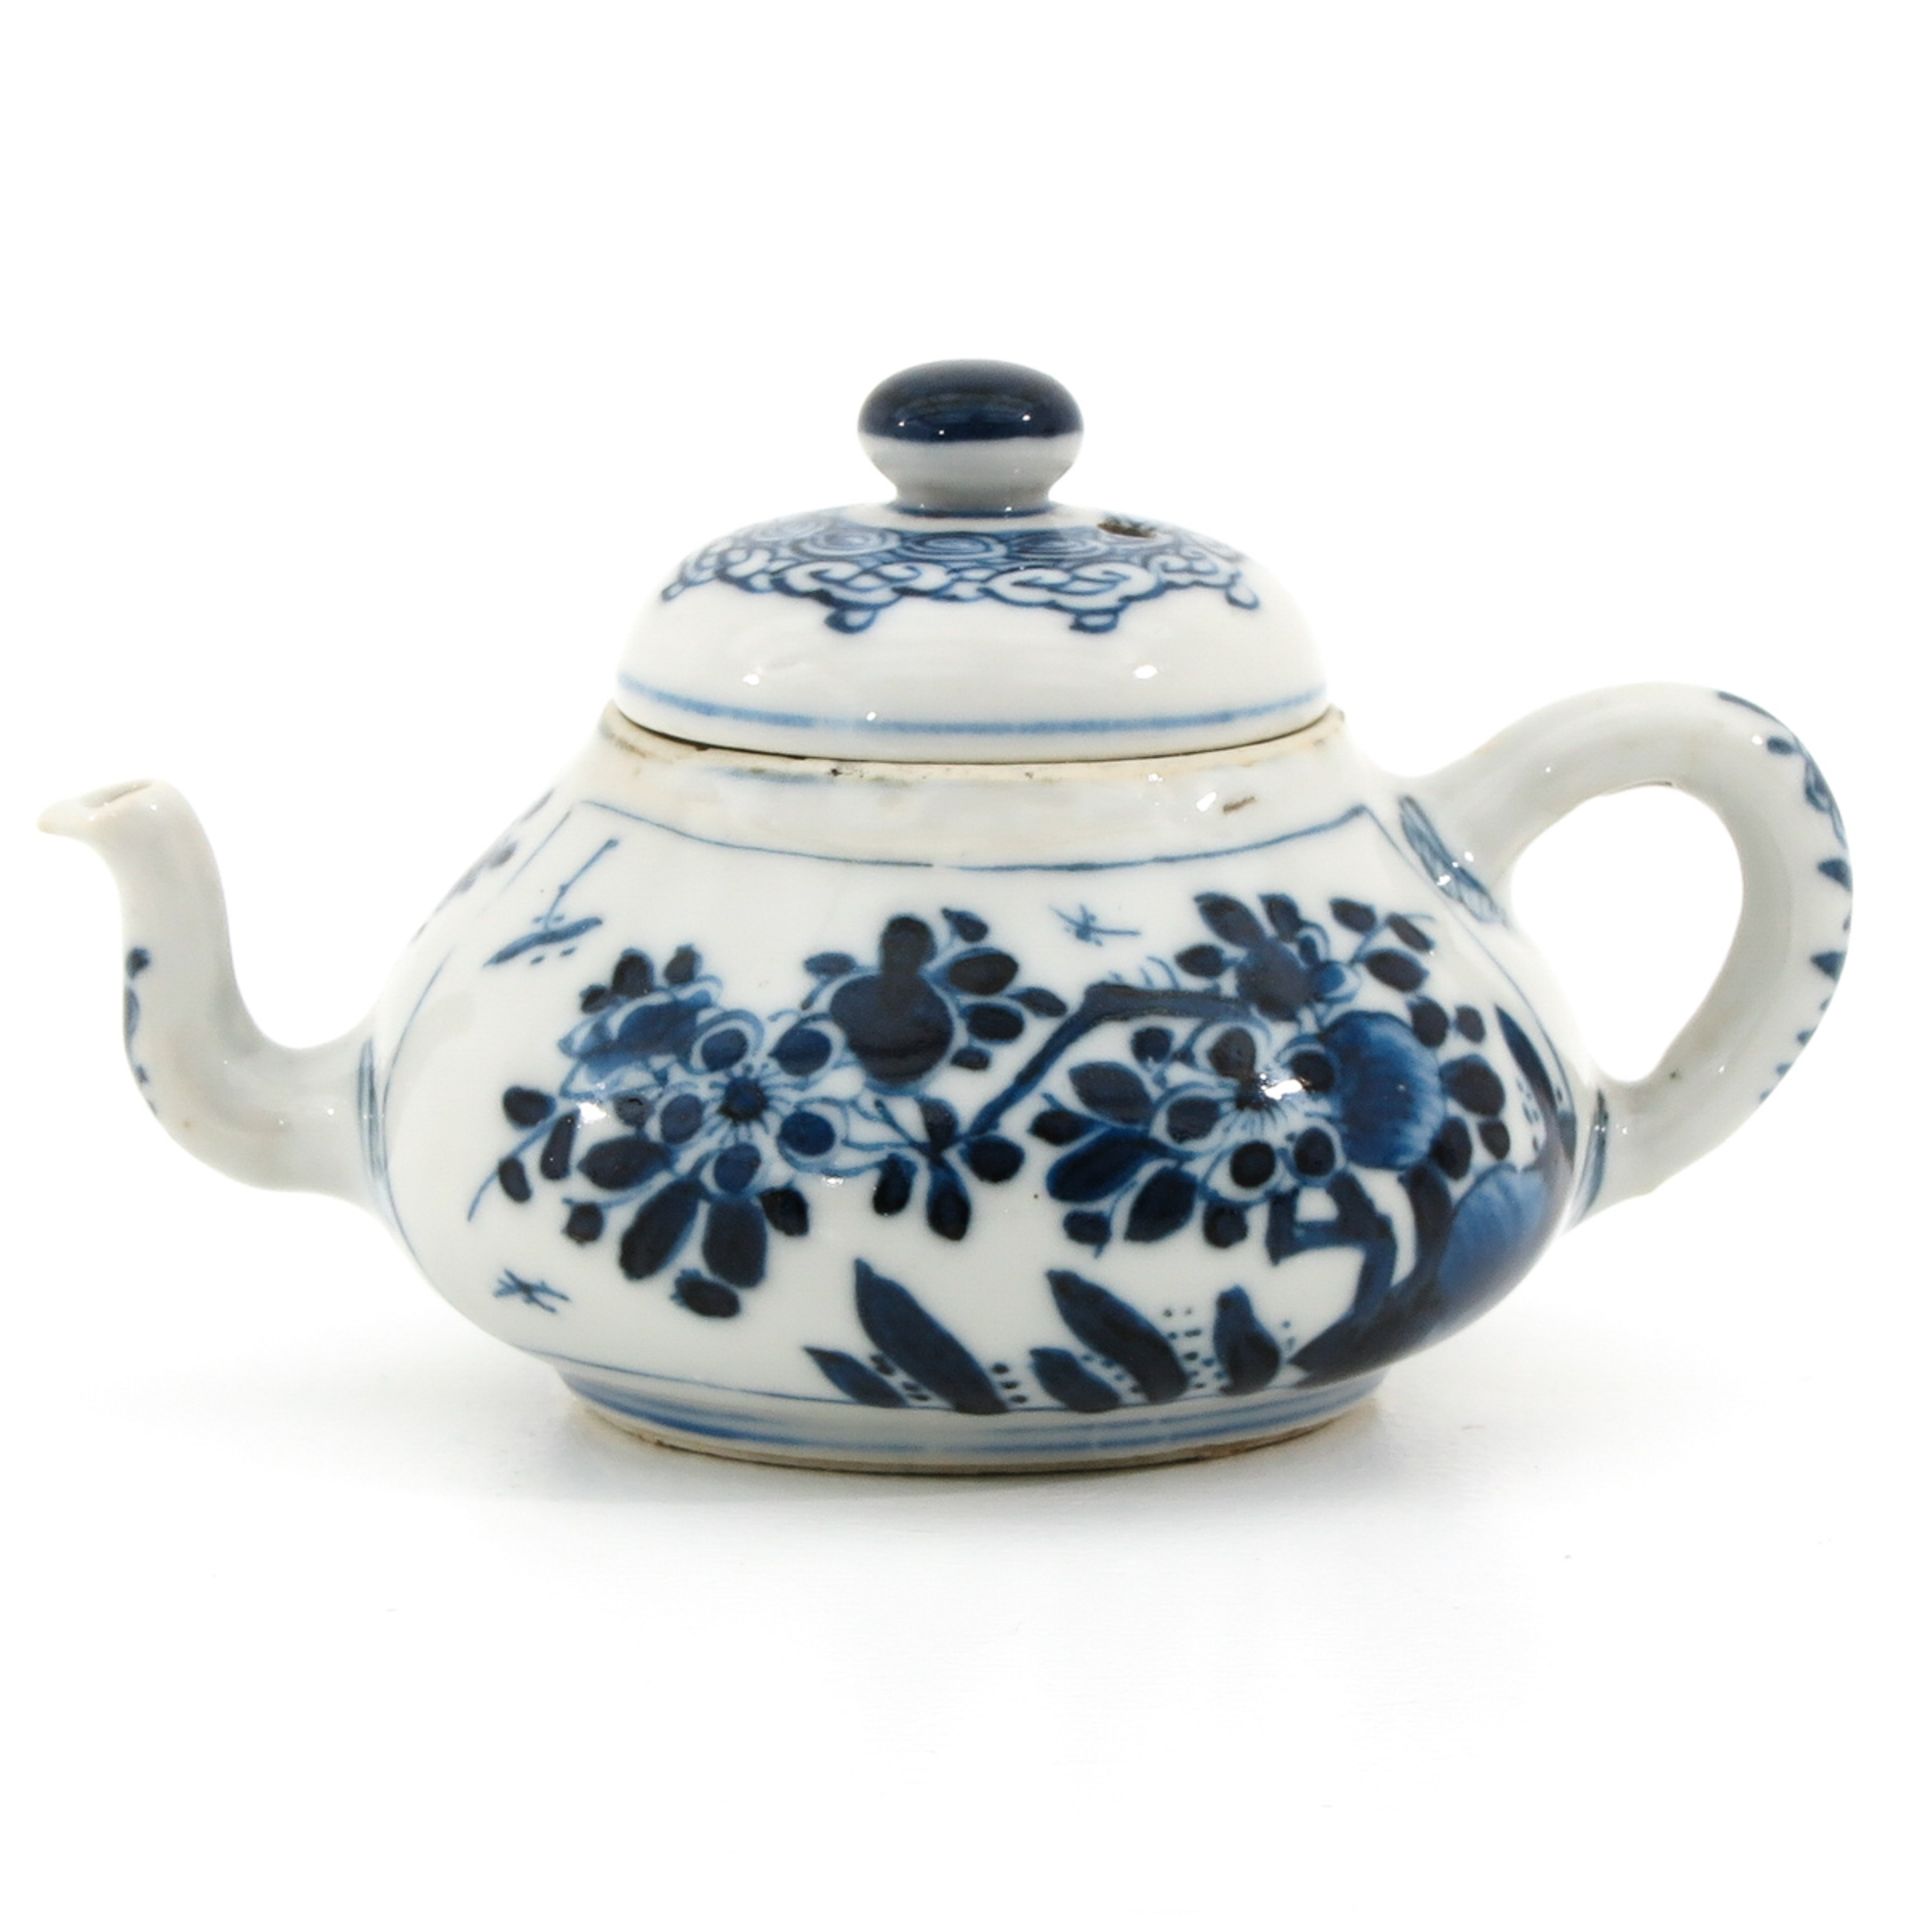 A Small Kangxi Period Teapot